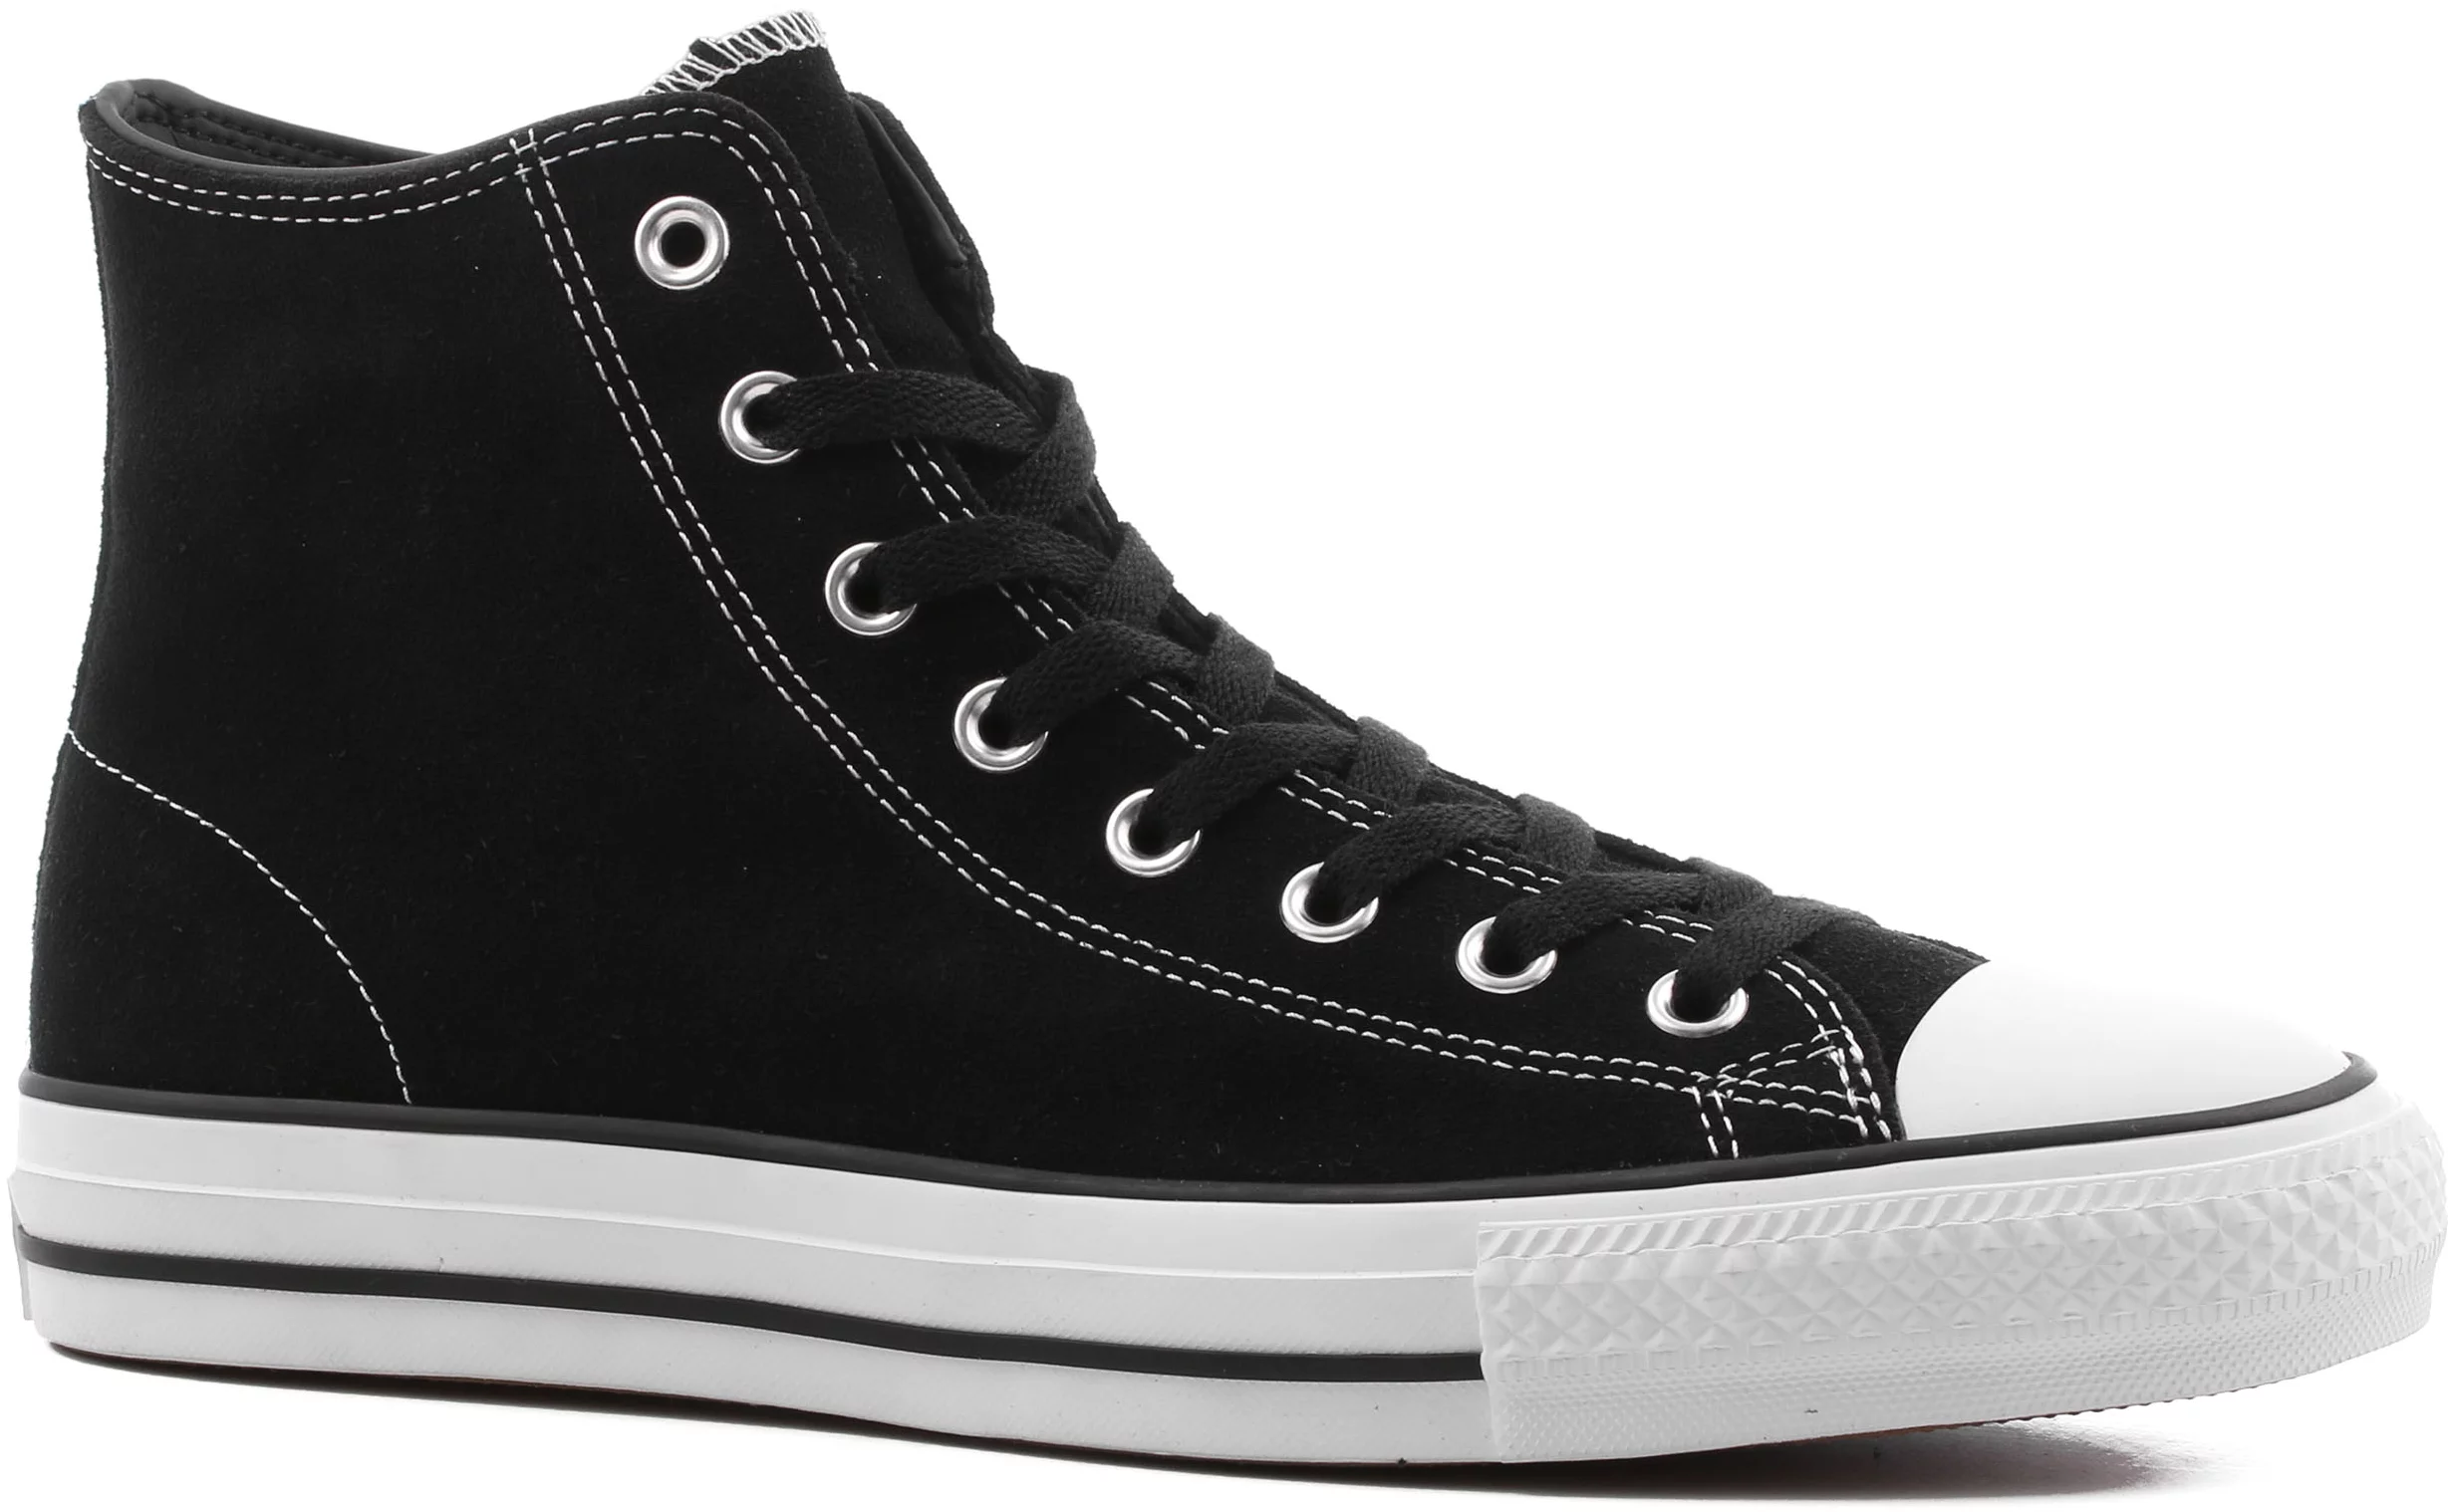 Respectievelijk gips twee weken Converse Chuck Taylor All Star Pro High Skate Shoes - (suede) black/black/white  - Free Shipping | Tactics